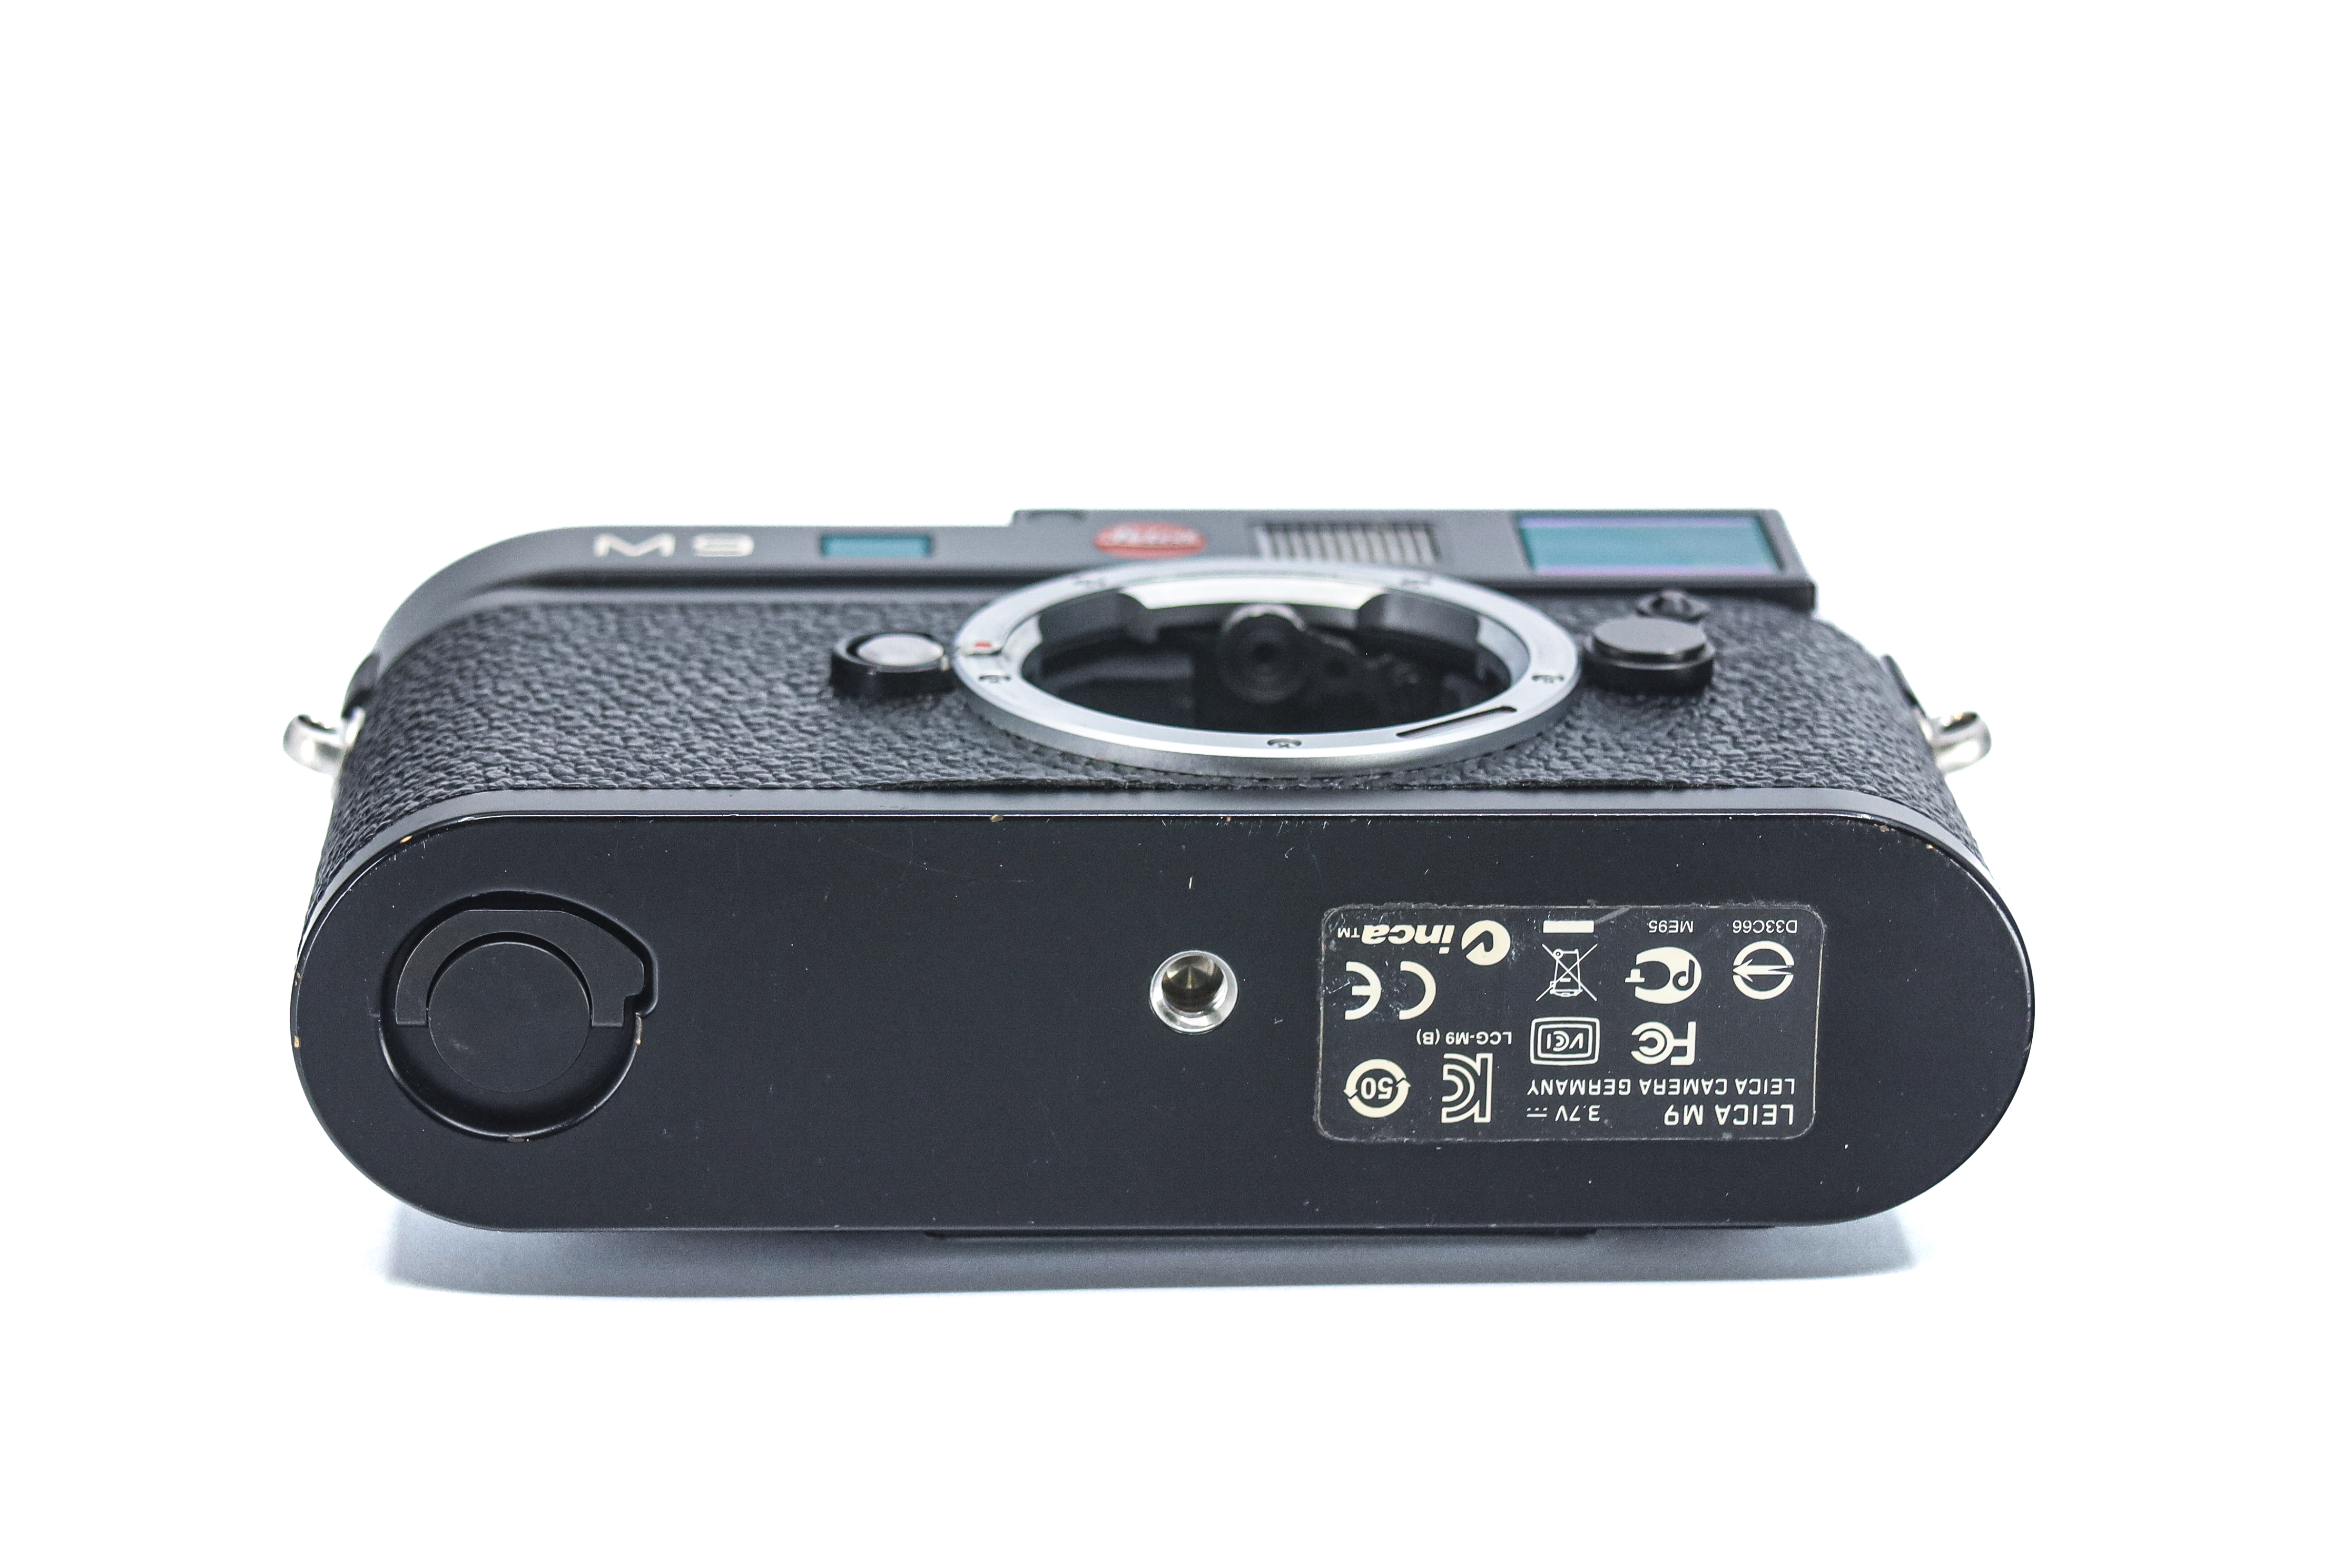 LeicaM9 2